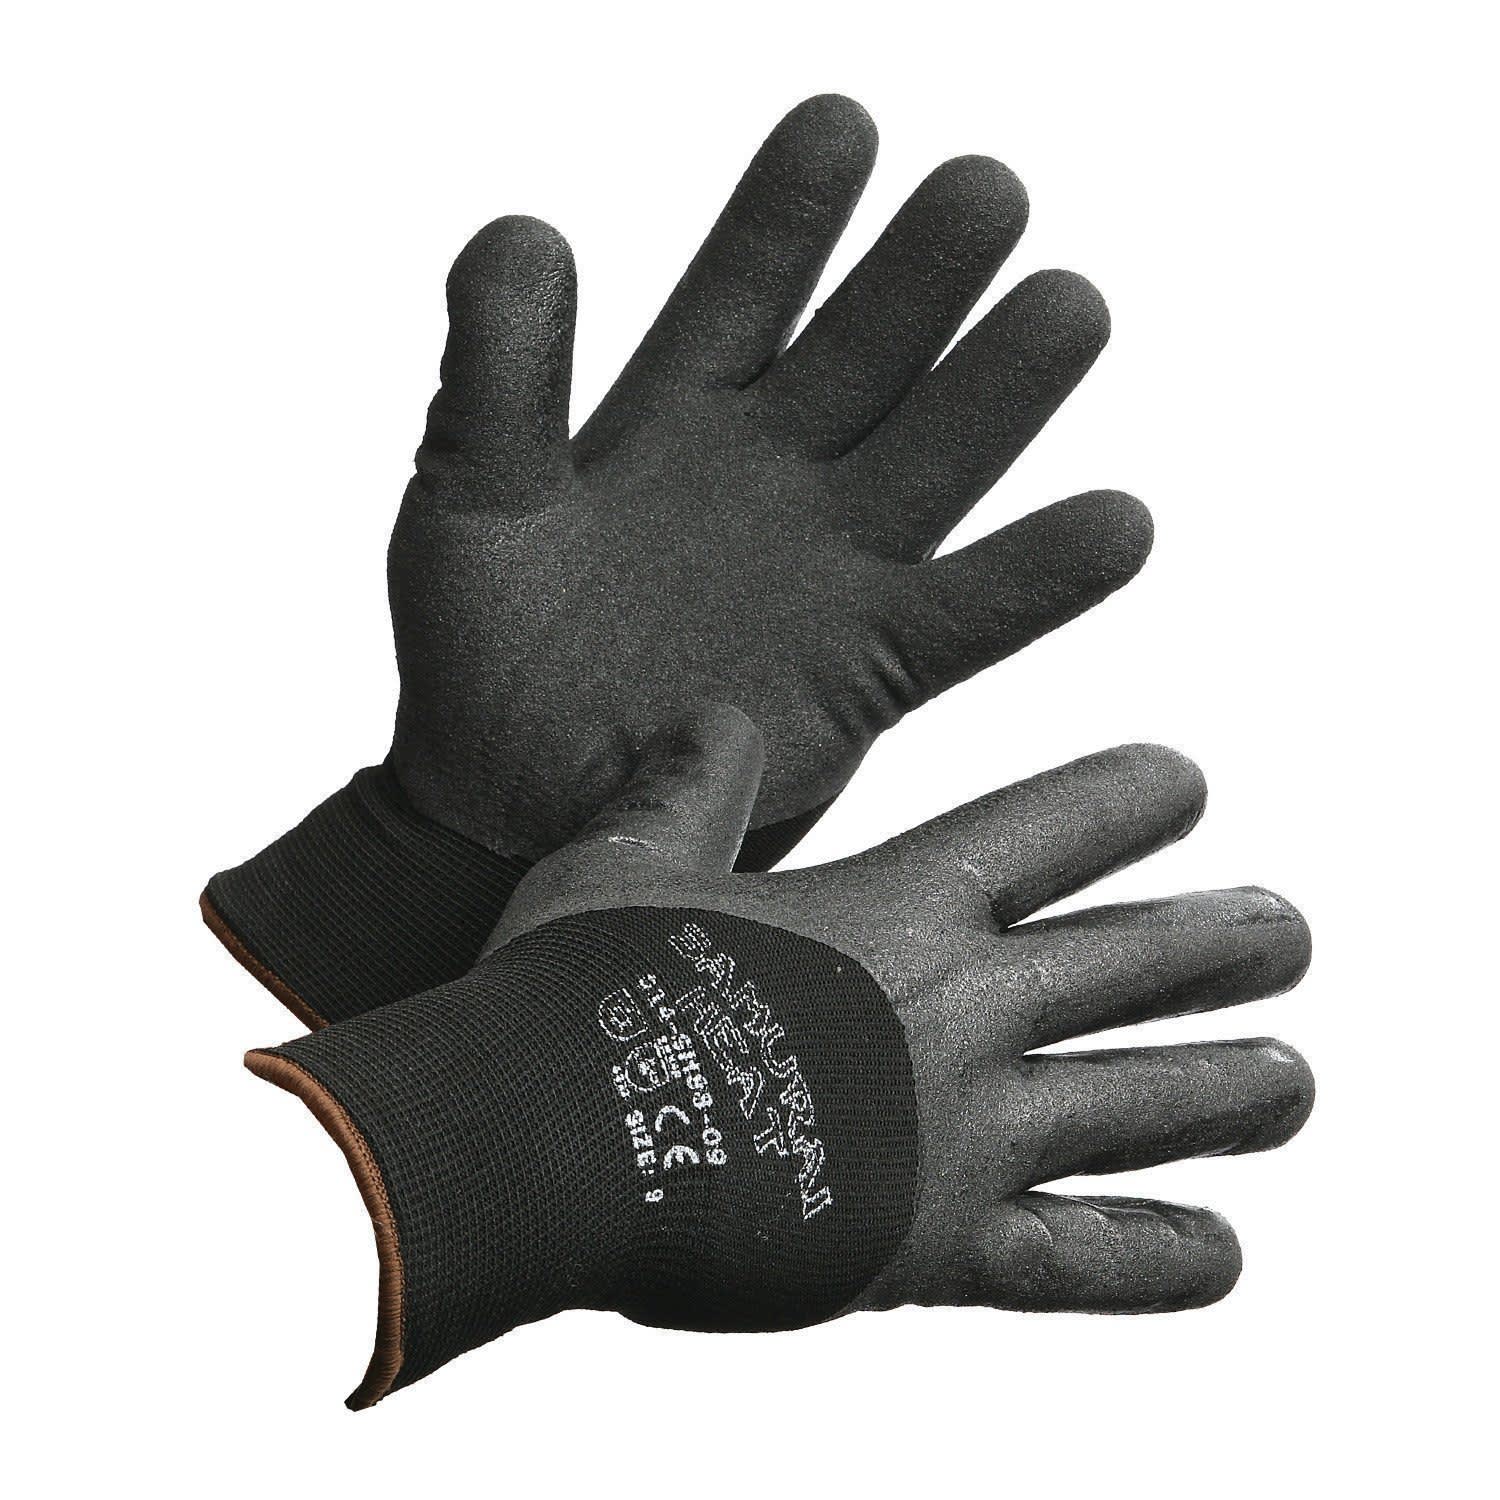 Samurai heat gloves 014- SH88 – Black, 11